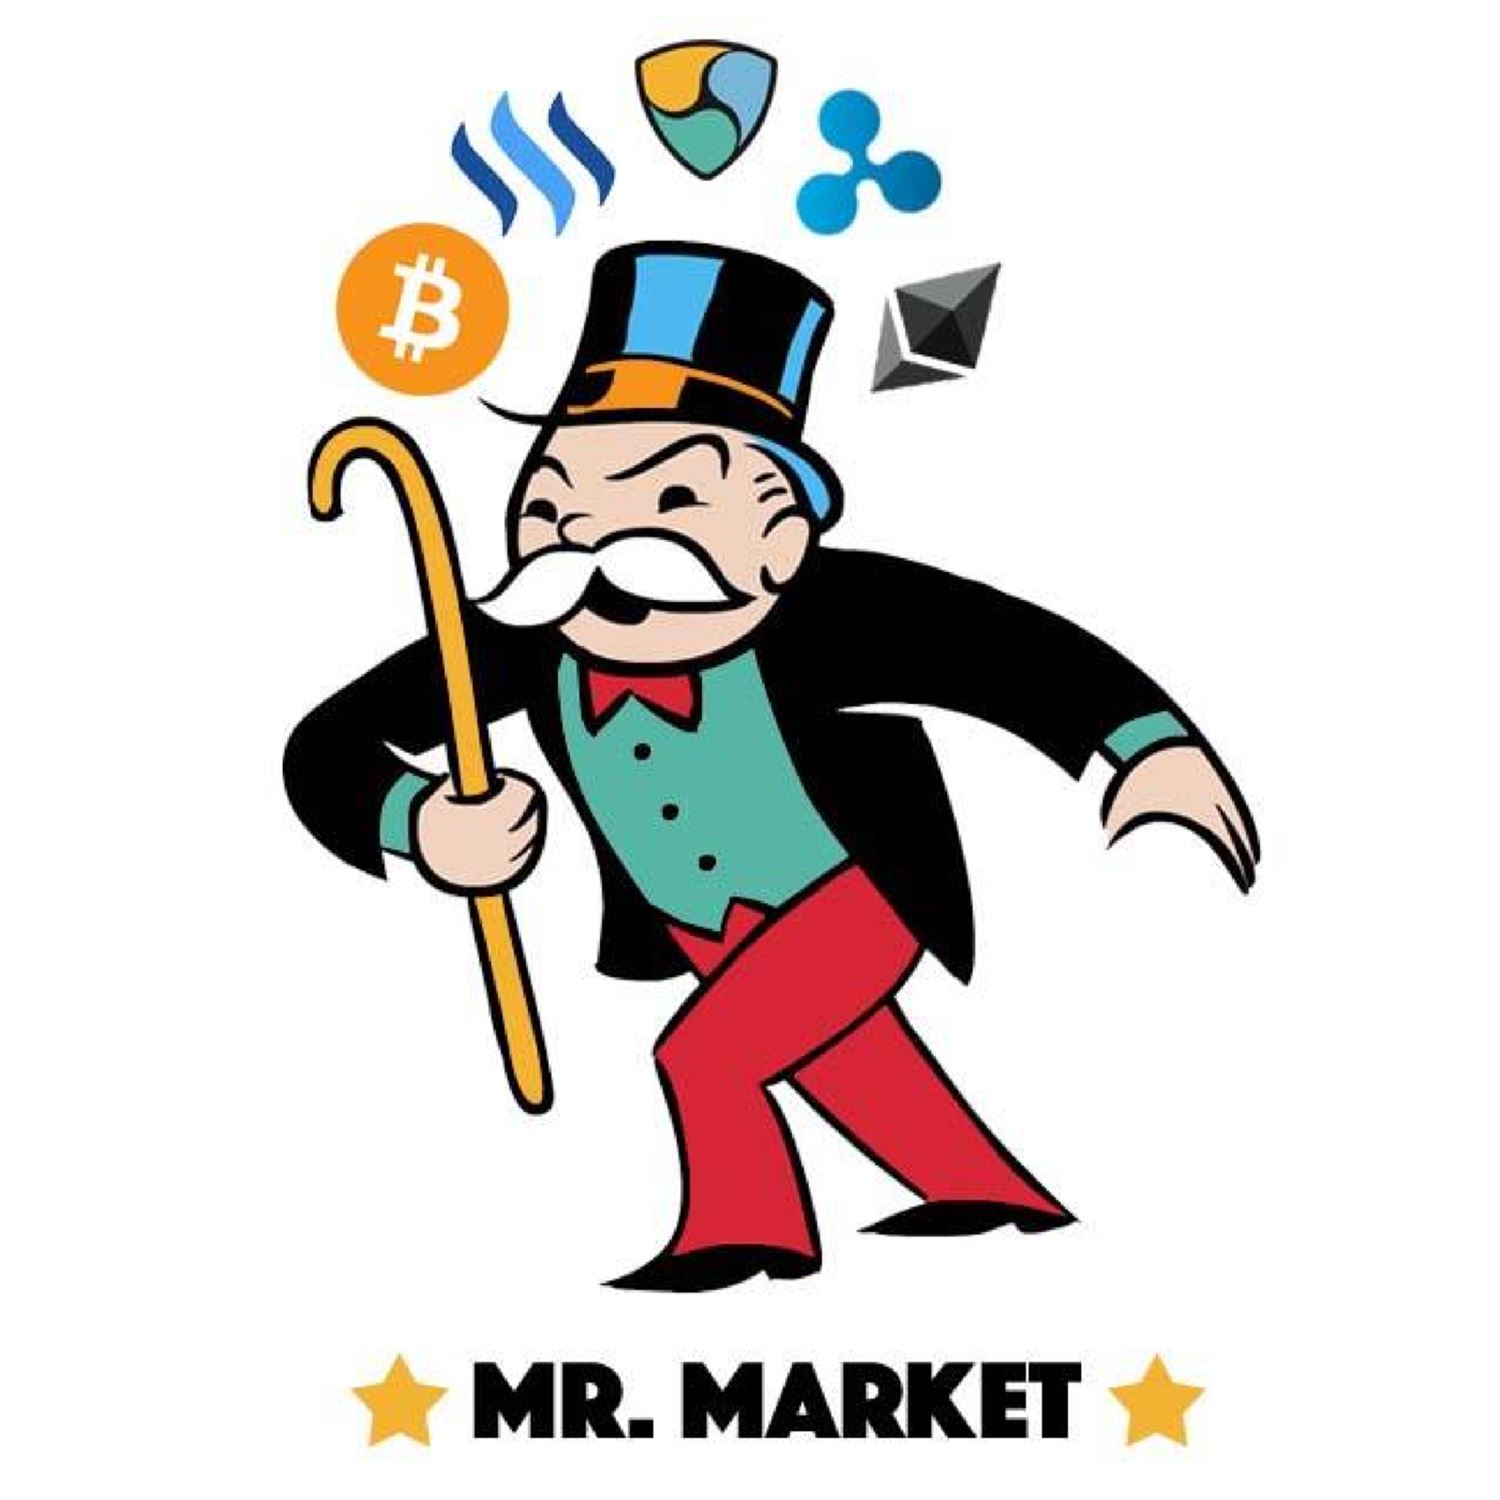 The manic depressive Mr. Market